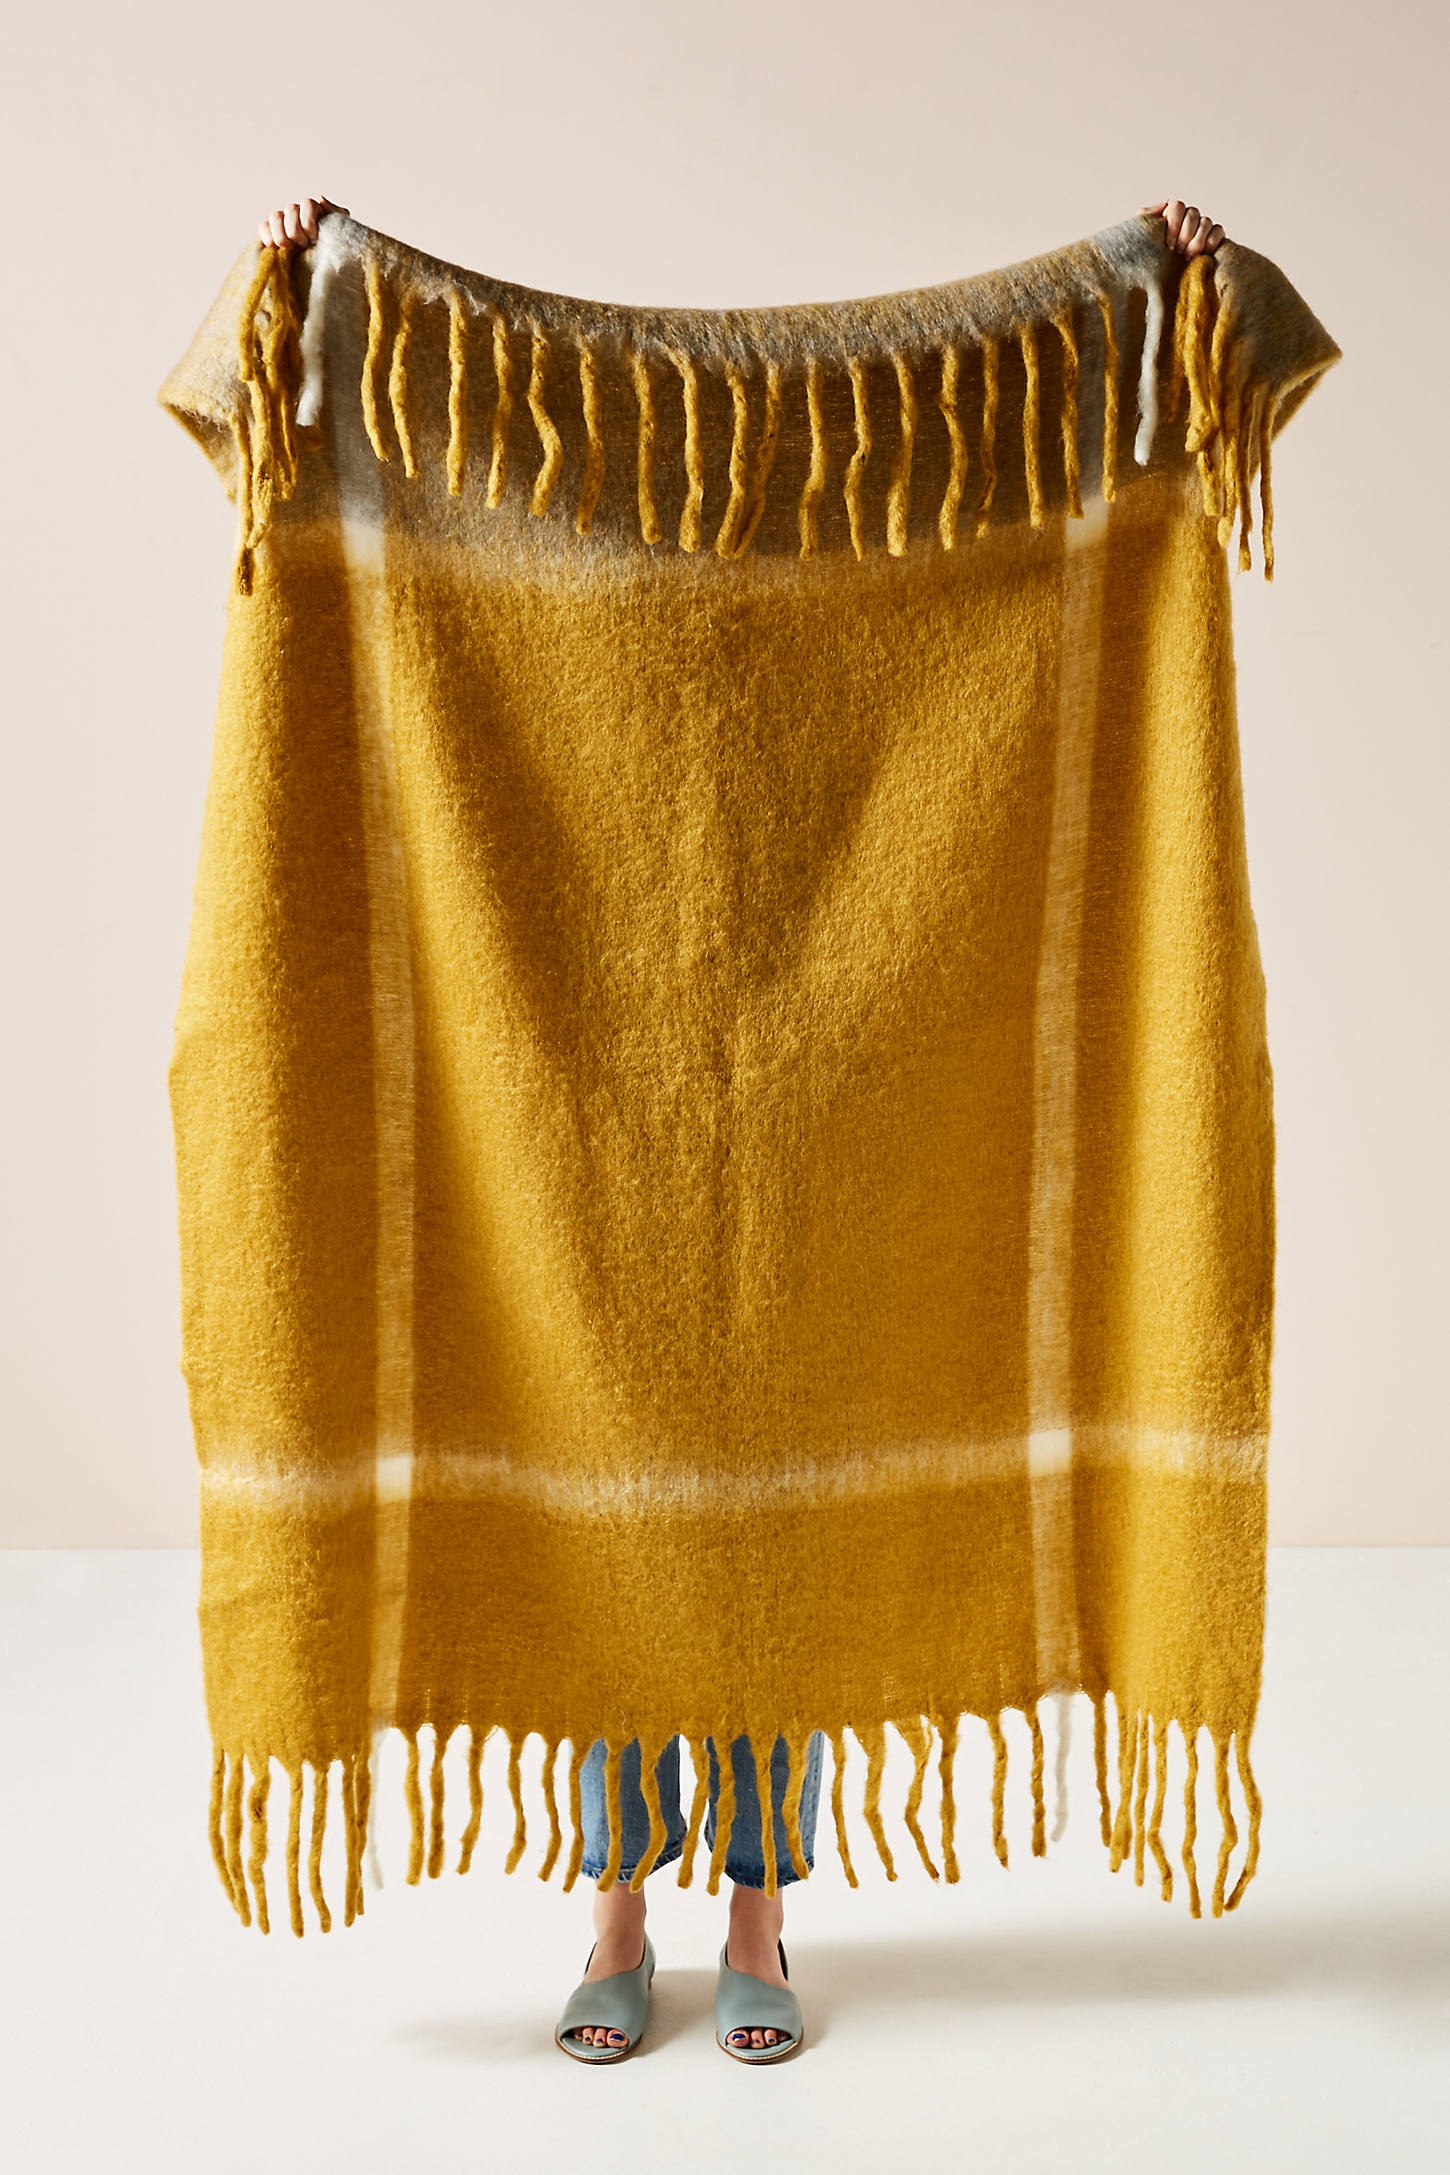 Woven Bella Throw Blanket - Image 0